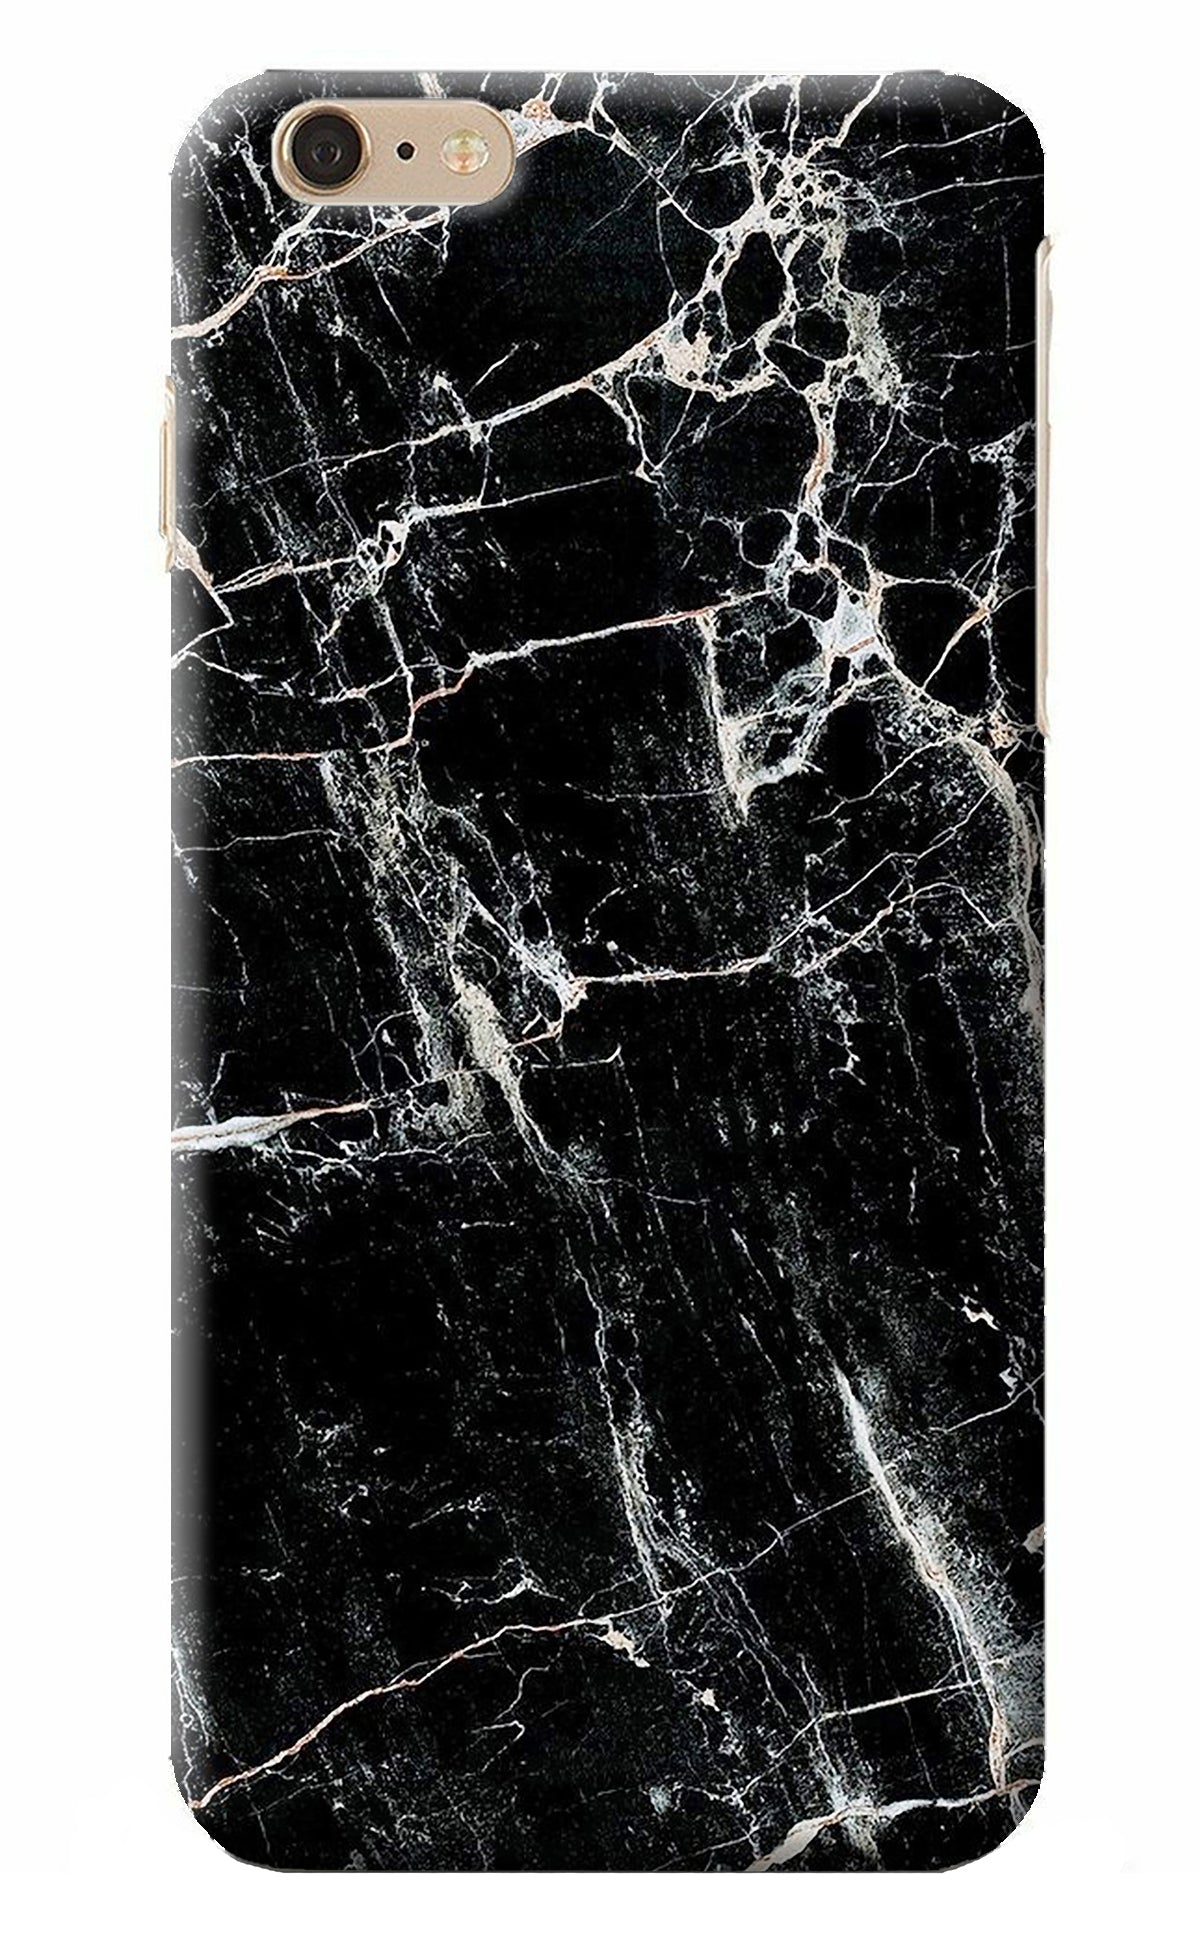 Black Marble Texture iPhone 6 Plus/6s Plus Back Cover